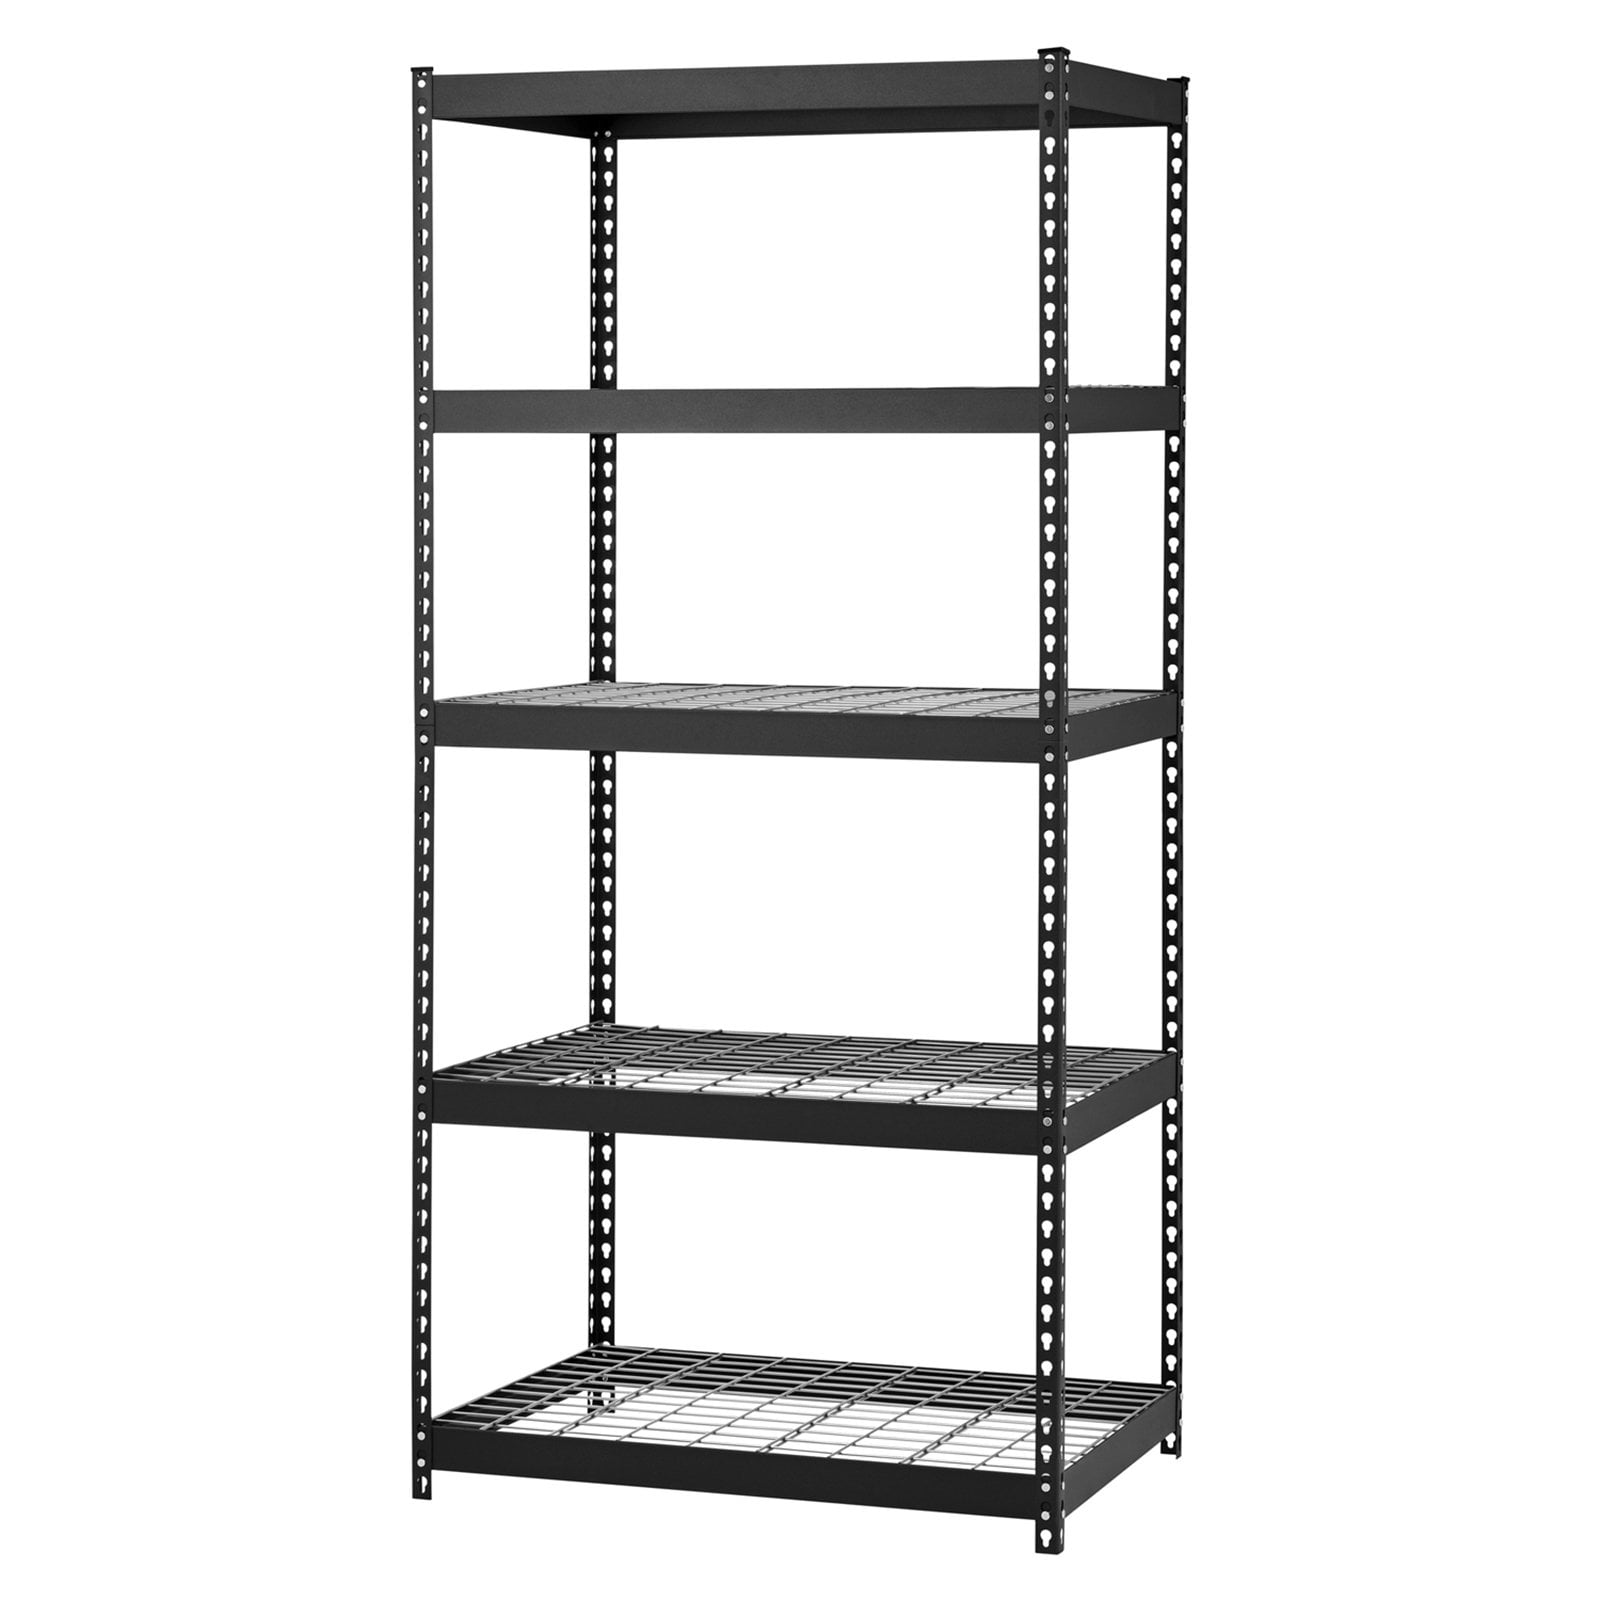 Gladiator Shelf Rack 4 Shelves, Gladiator Shelving Unit